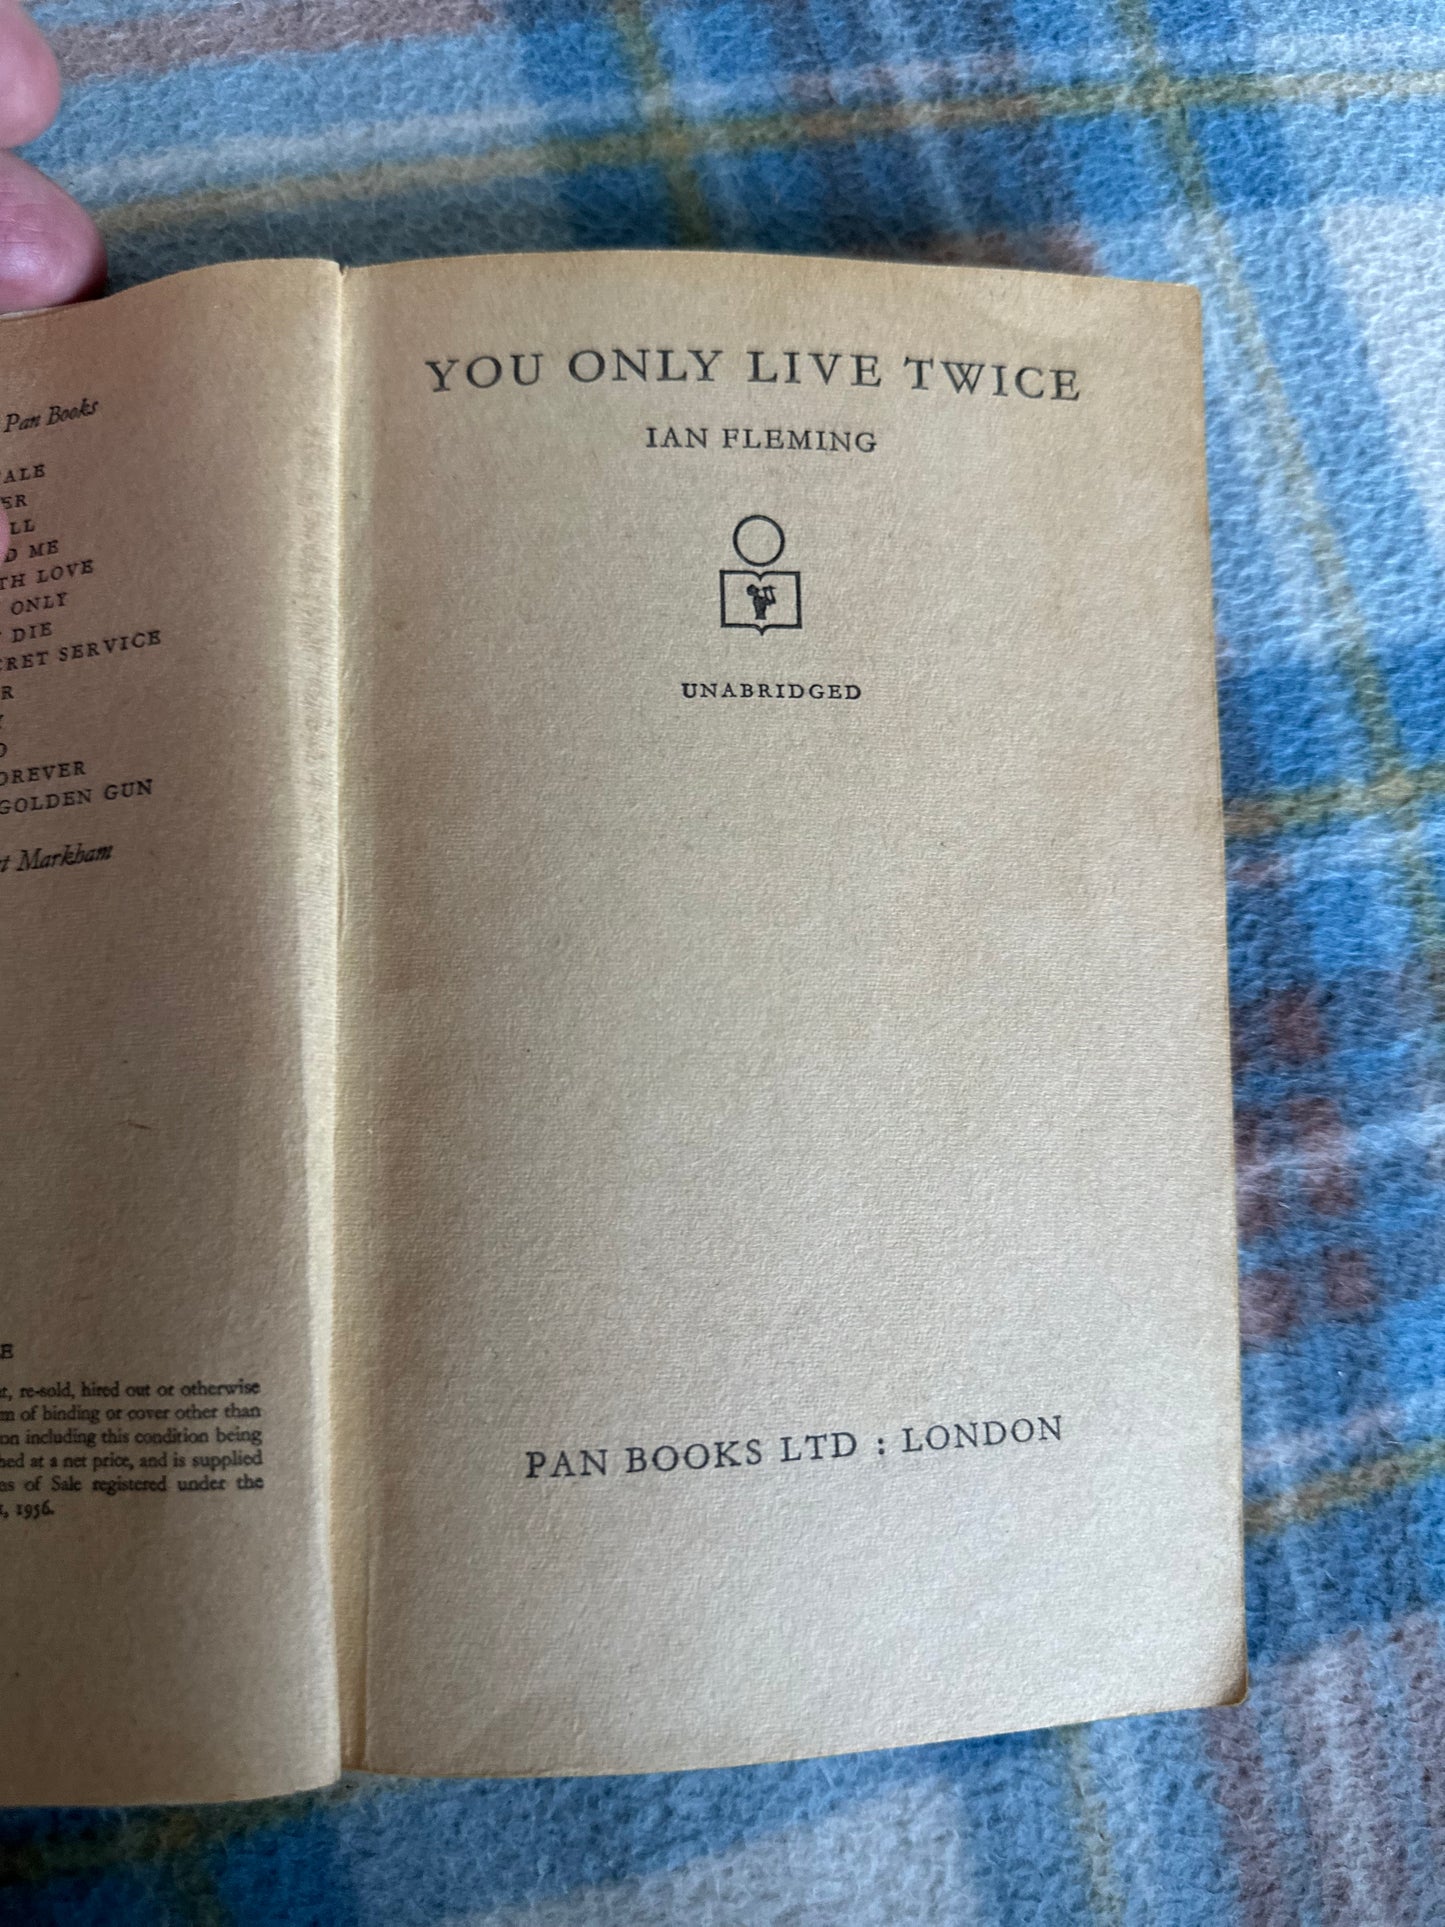 1973 James Bond You Only Live Twice - Ian Fleming (Pan Books)